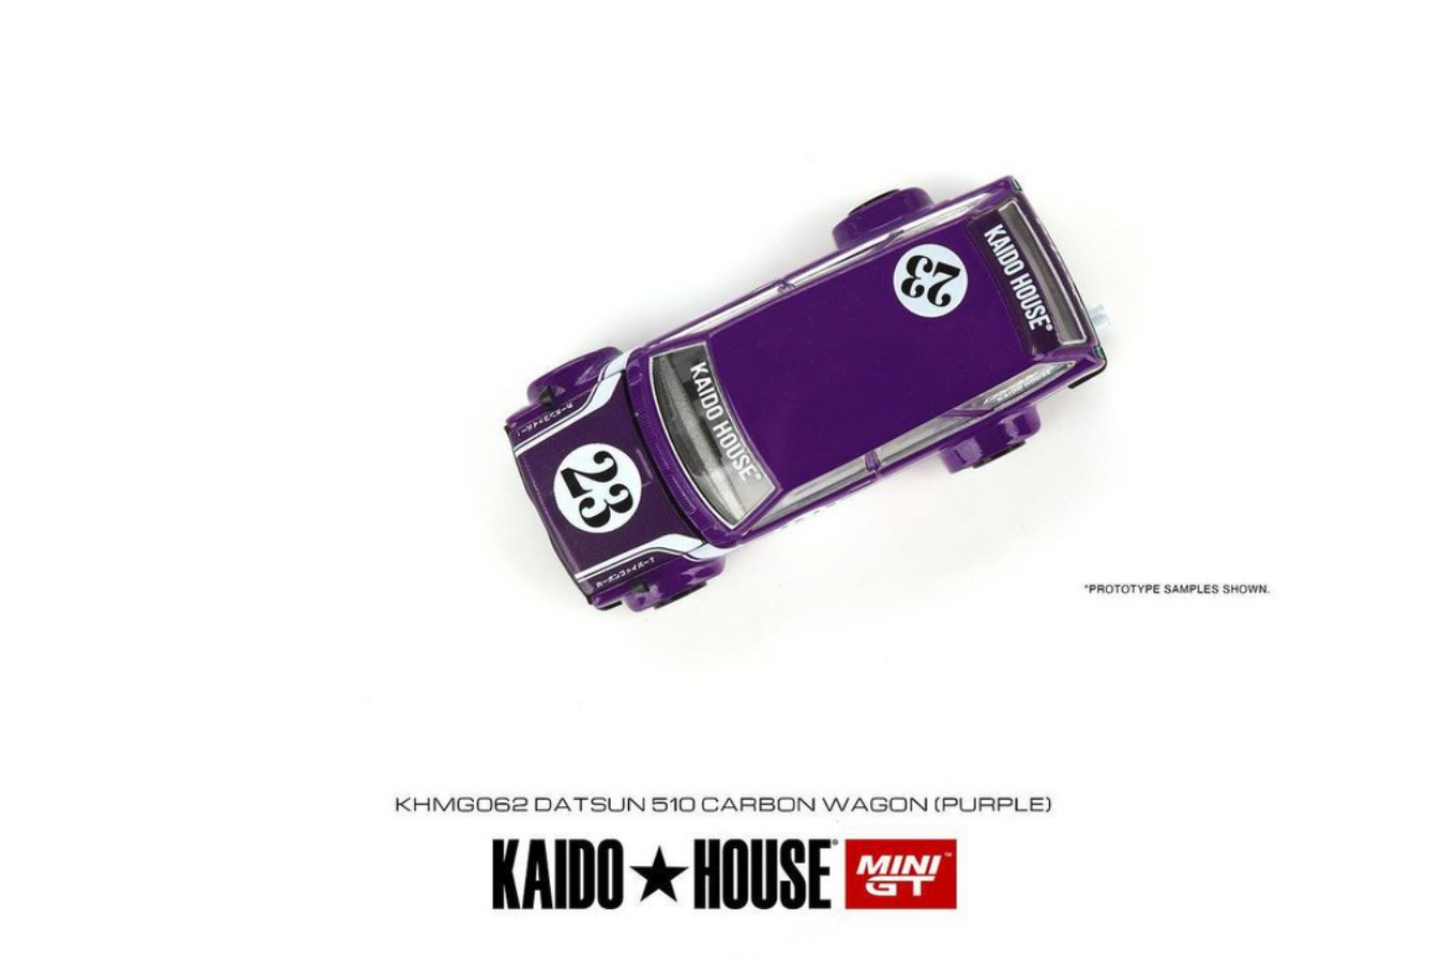 Mini GT x Kaido House Datsun 510 Carbon Wagon in Purple